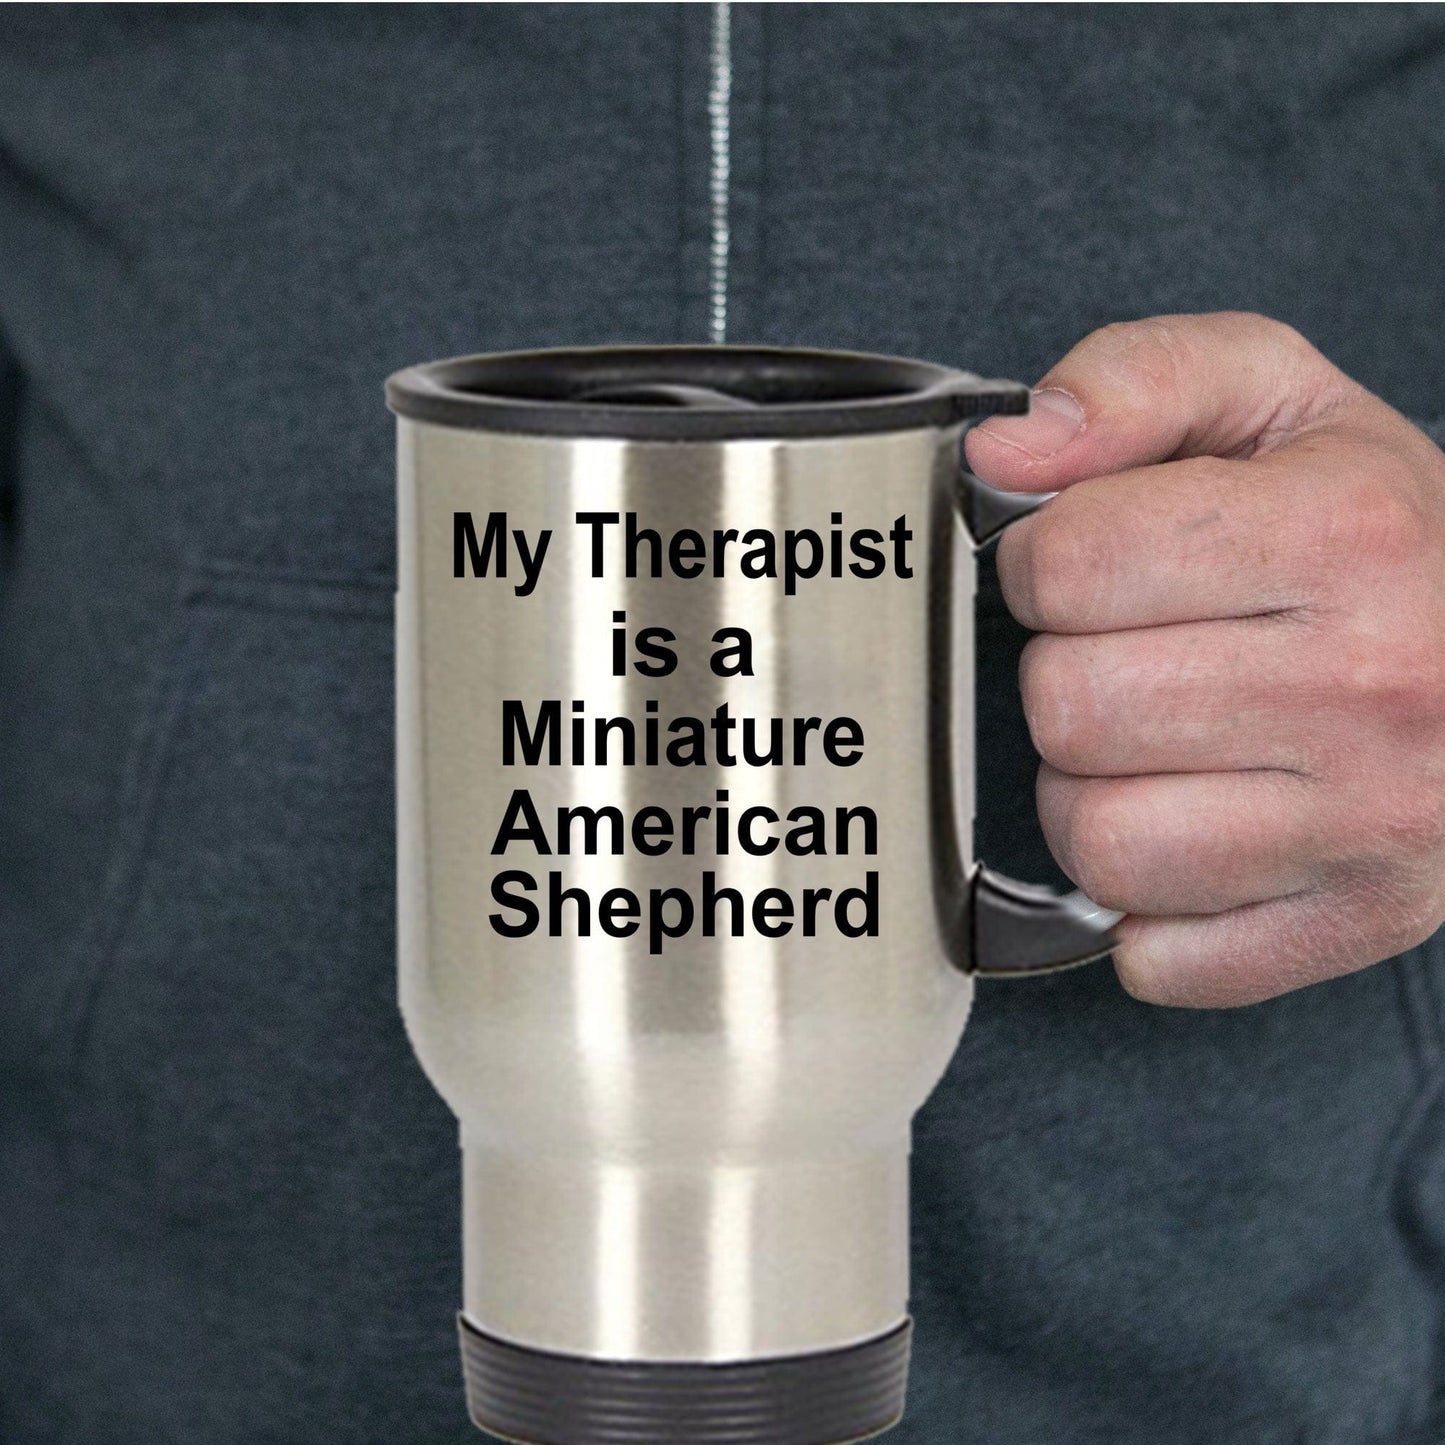 Miniature American Shepherd Therapist Travel Coffee Mug